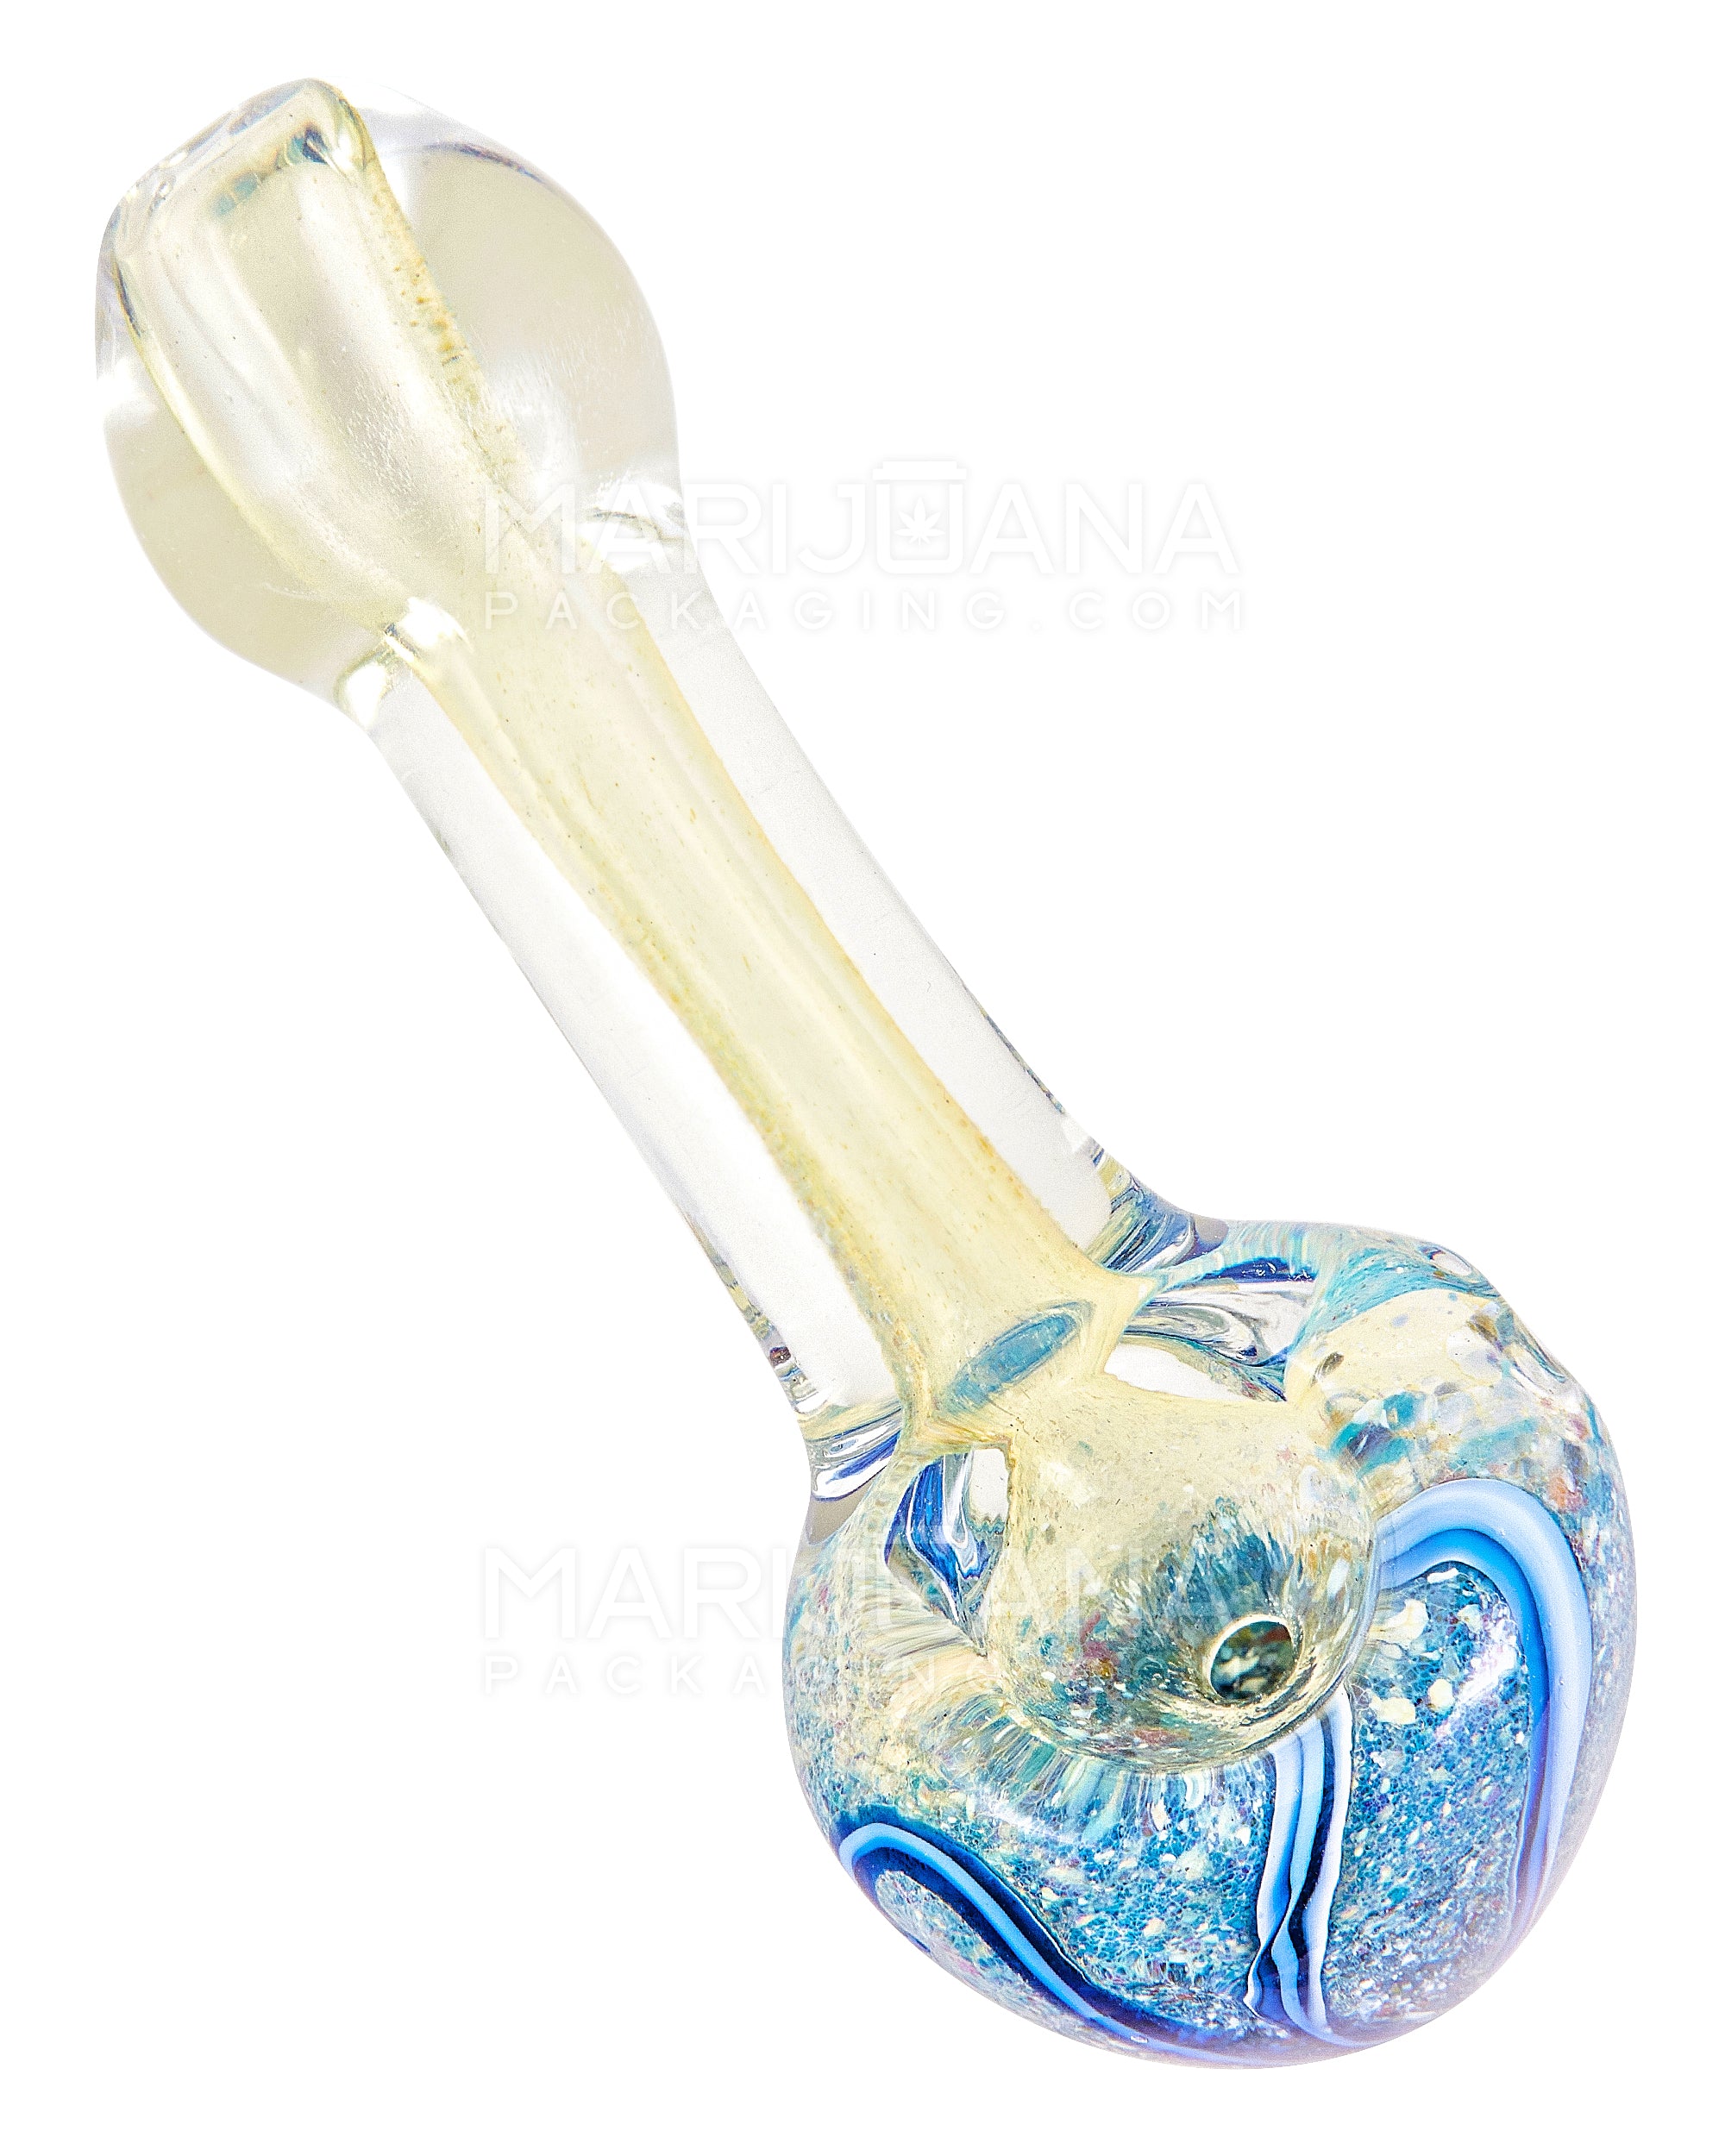 Frit & Fumed Spoon Hand Pipe w/ Swirls | 3.5in Long - Glass - Assorted - 1